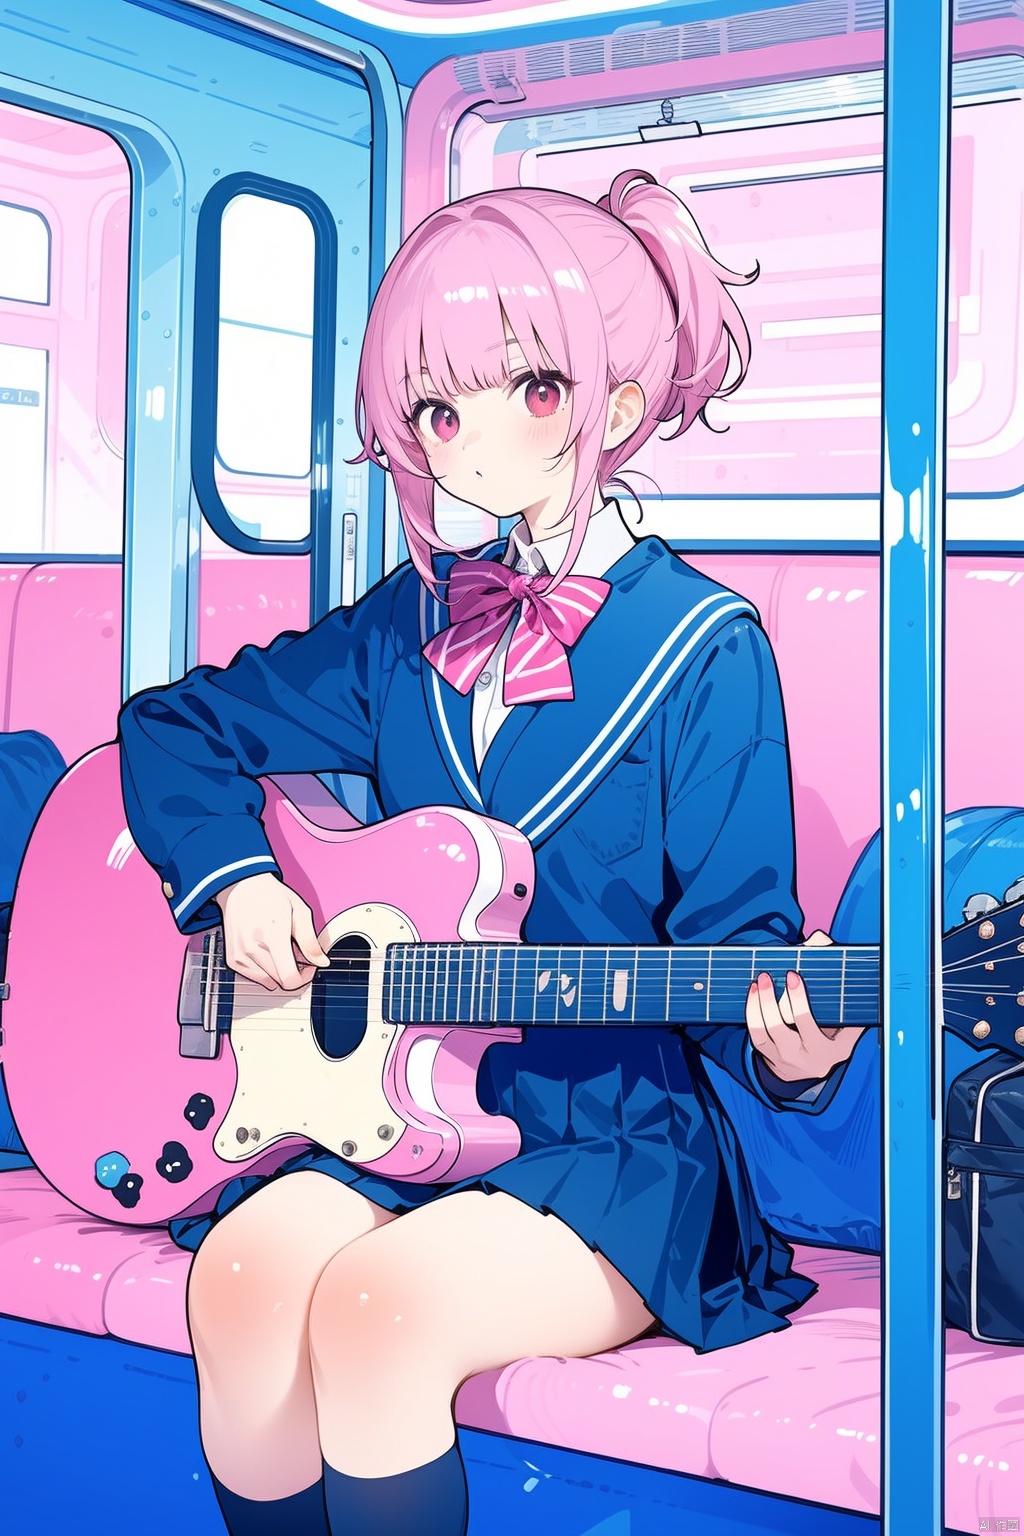  Inside the subway car, a girl, school uniform, panorama, cute girl, playing a guitar, fresh, sitting,pink theme